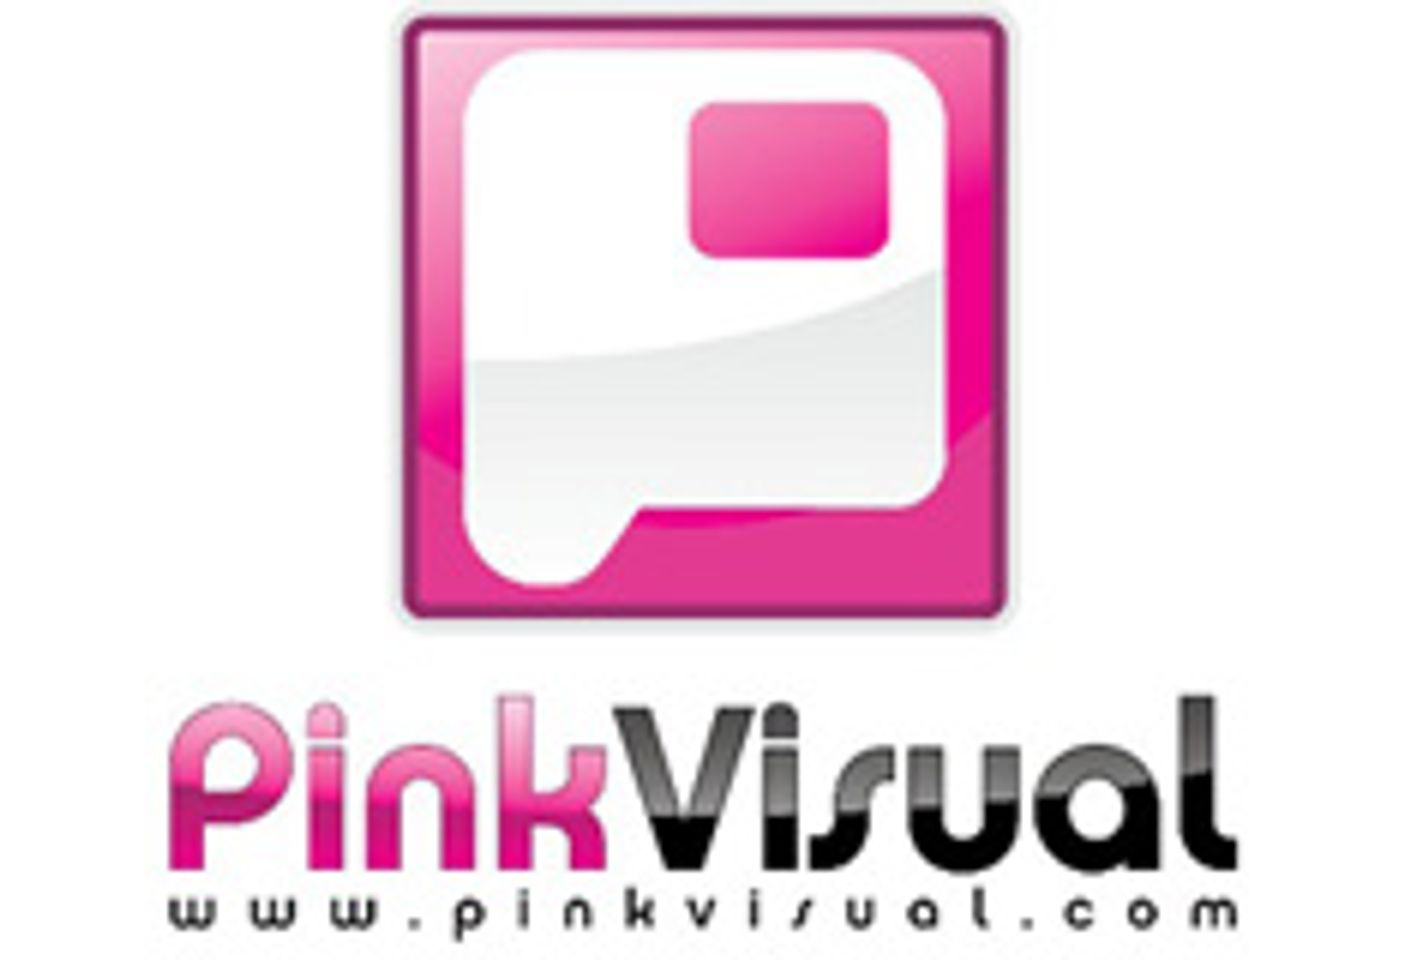 Pink Visual Performer to ‘Tweet’ During Shoot Friday